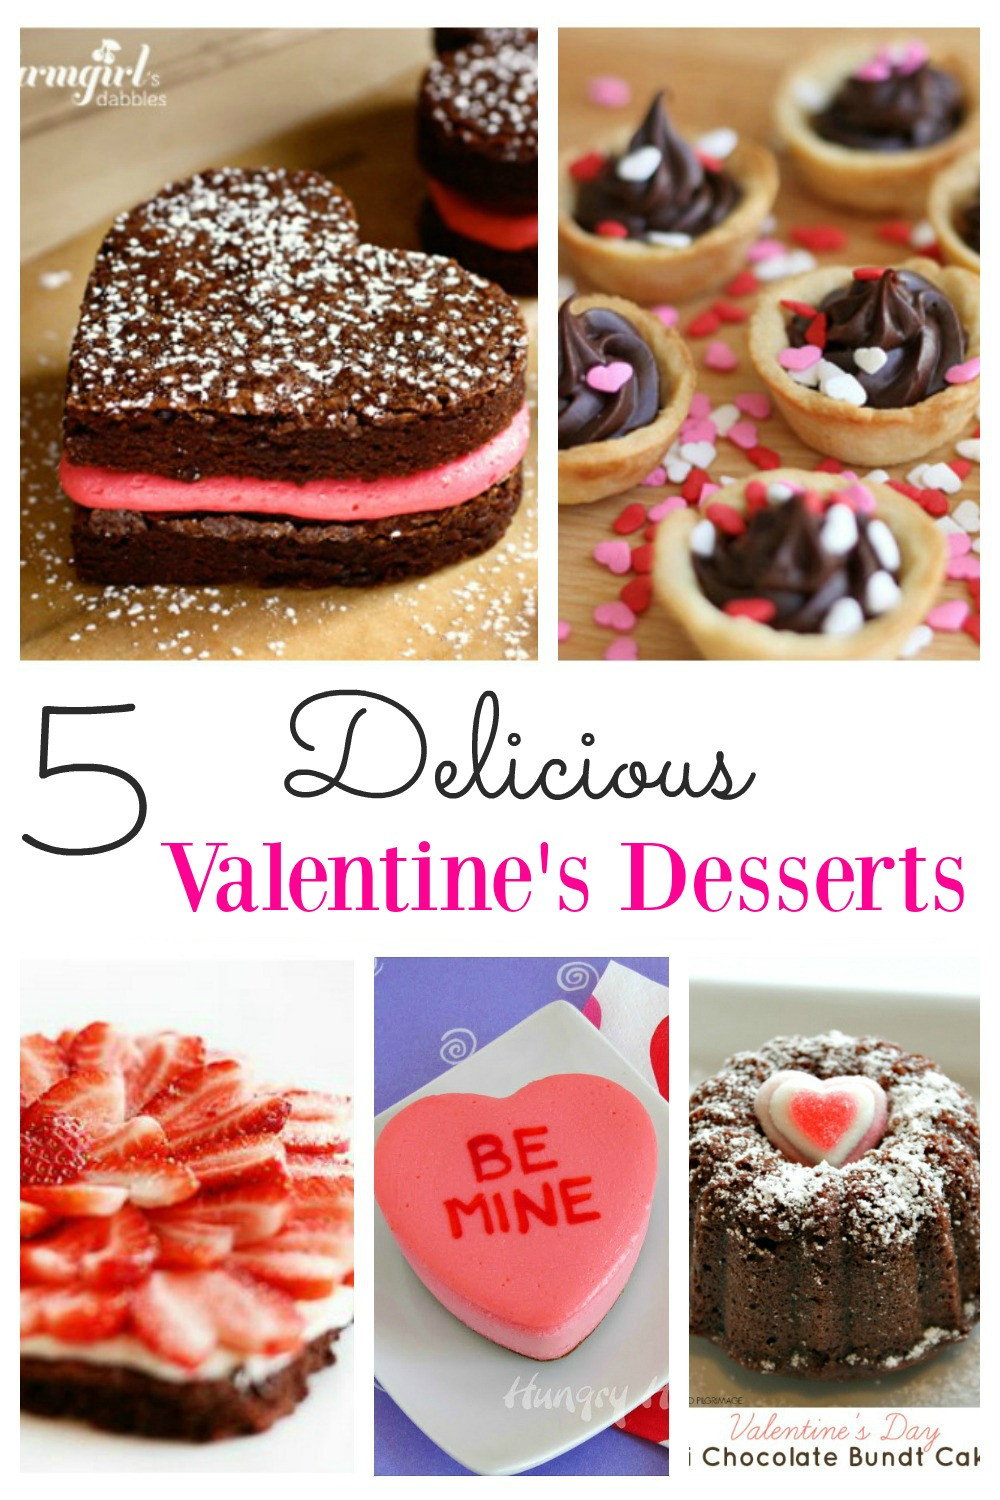 Valentine Recipes Desserts
 Delicious Valentines Desserts